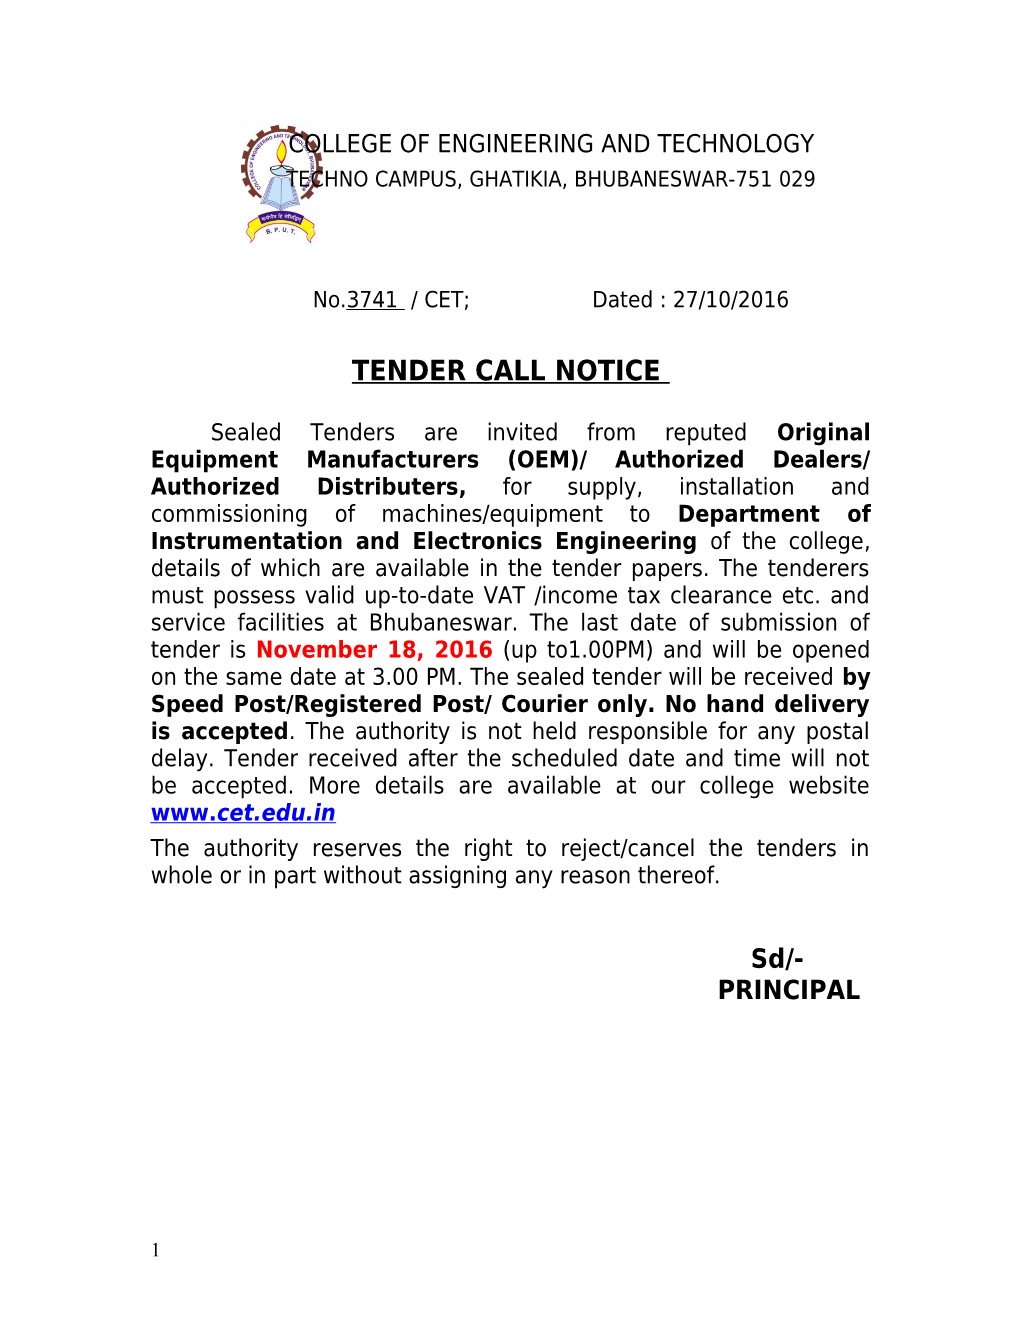 Tender Call Notice s2